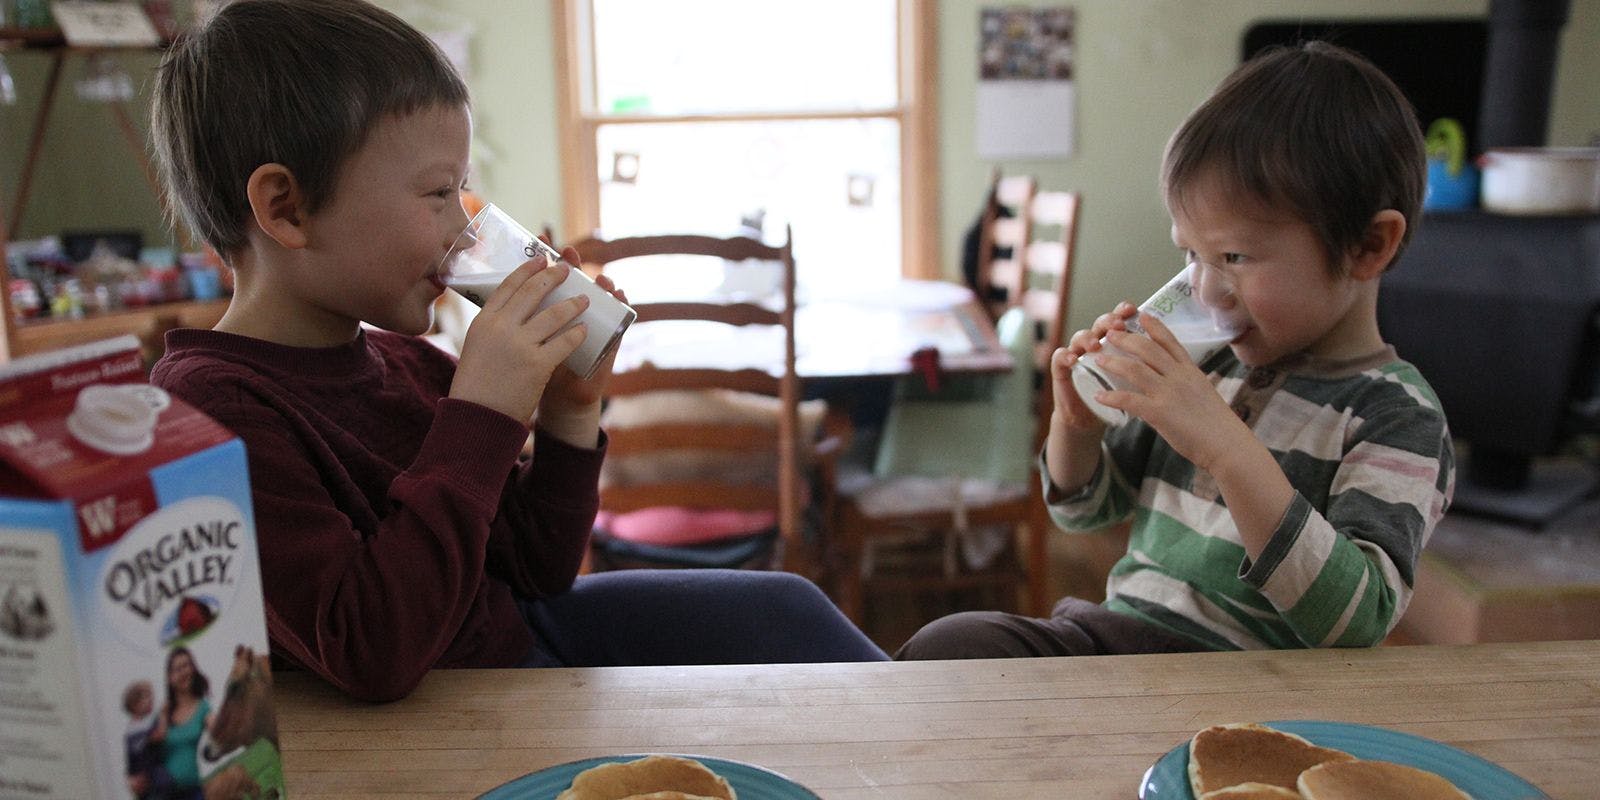 Kids drinking milk at breakfast table.